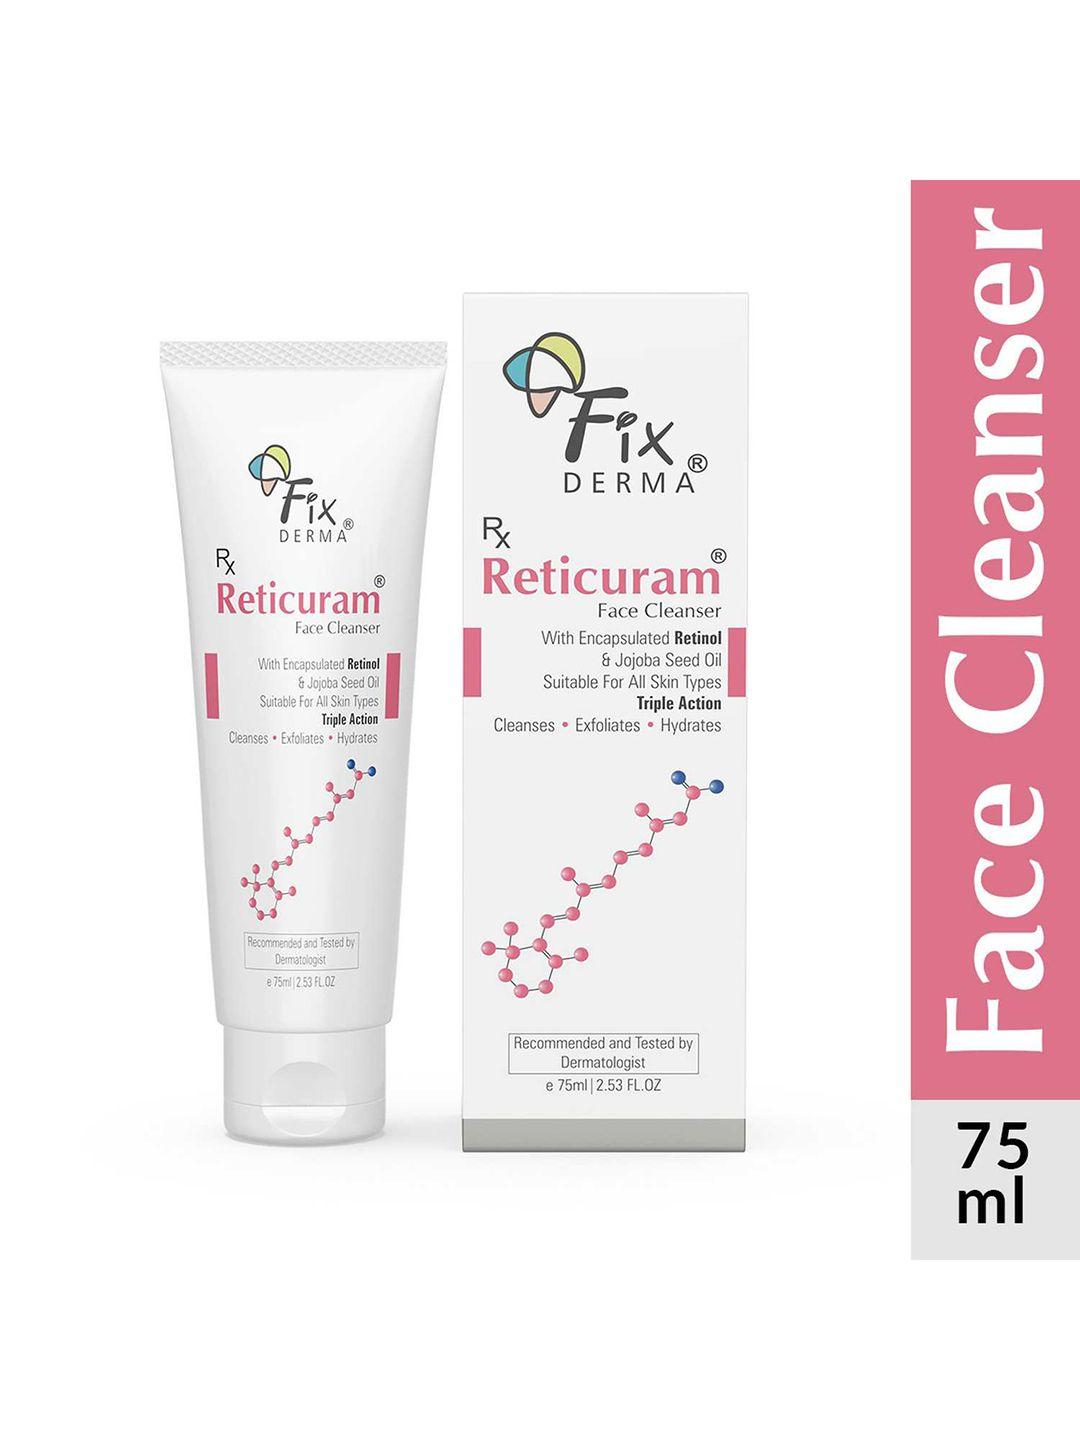 fixderma 0.5% retinol reticuram face cleanser with jojoba oil for all skin types - 75ml